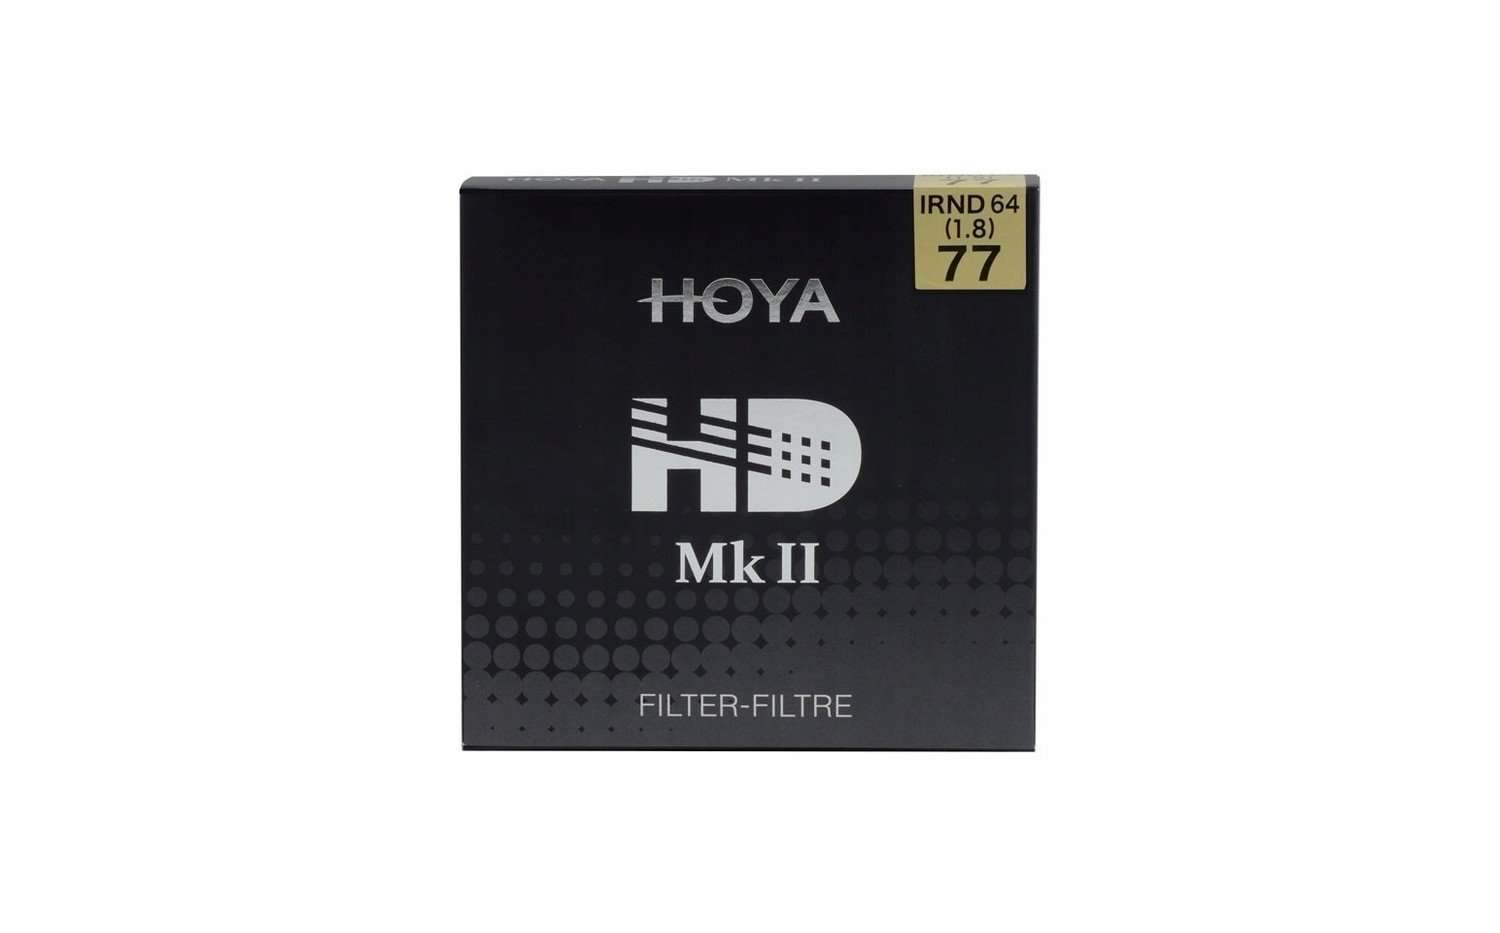 Filtr Hoya Hd MkII IRND64 (1.8) 55mm